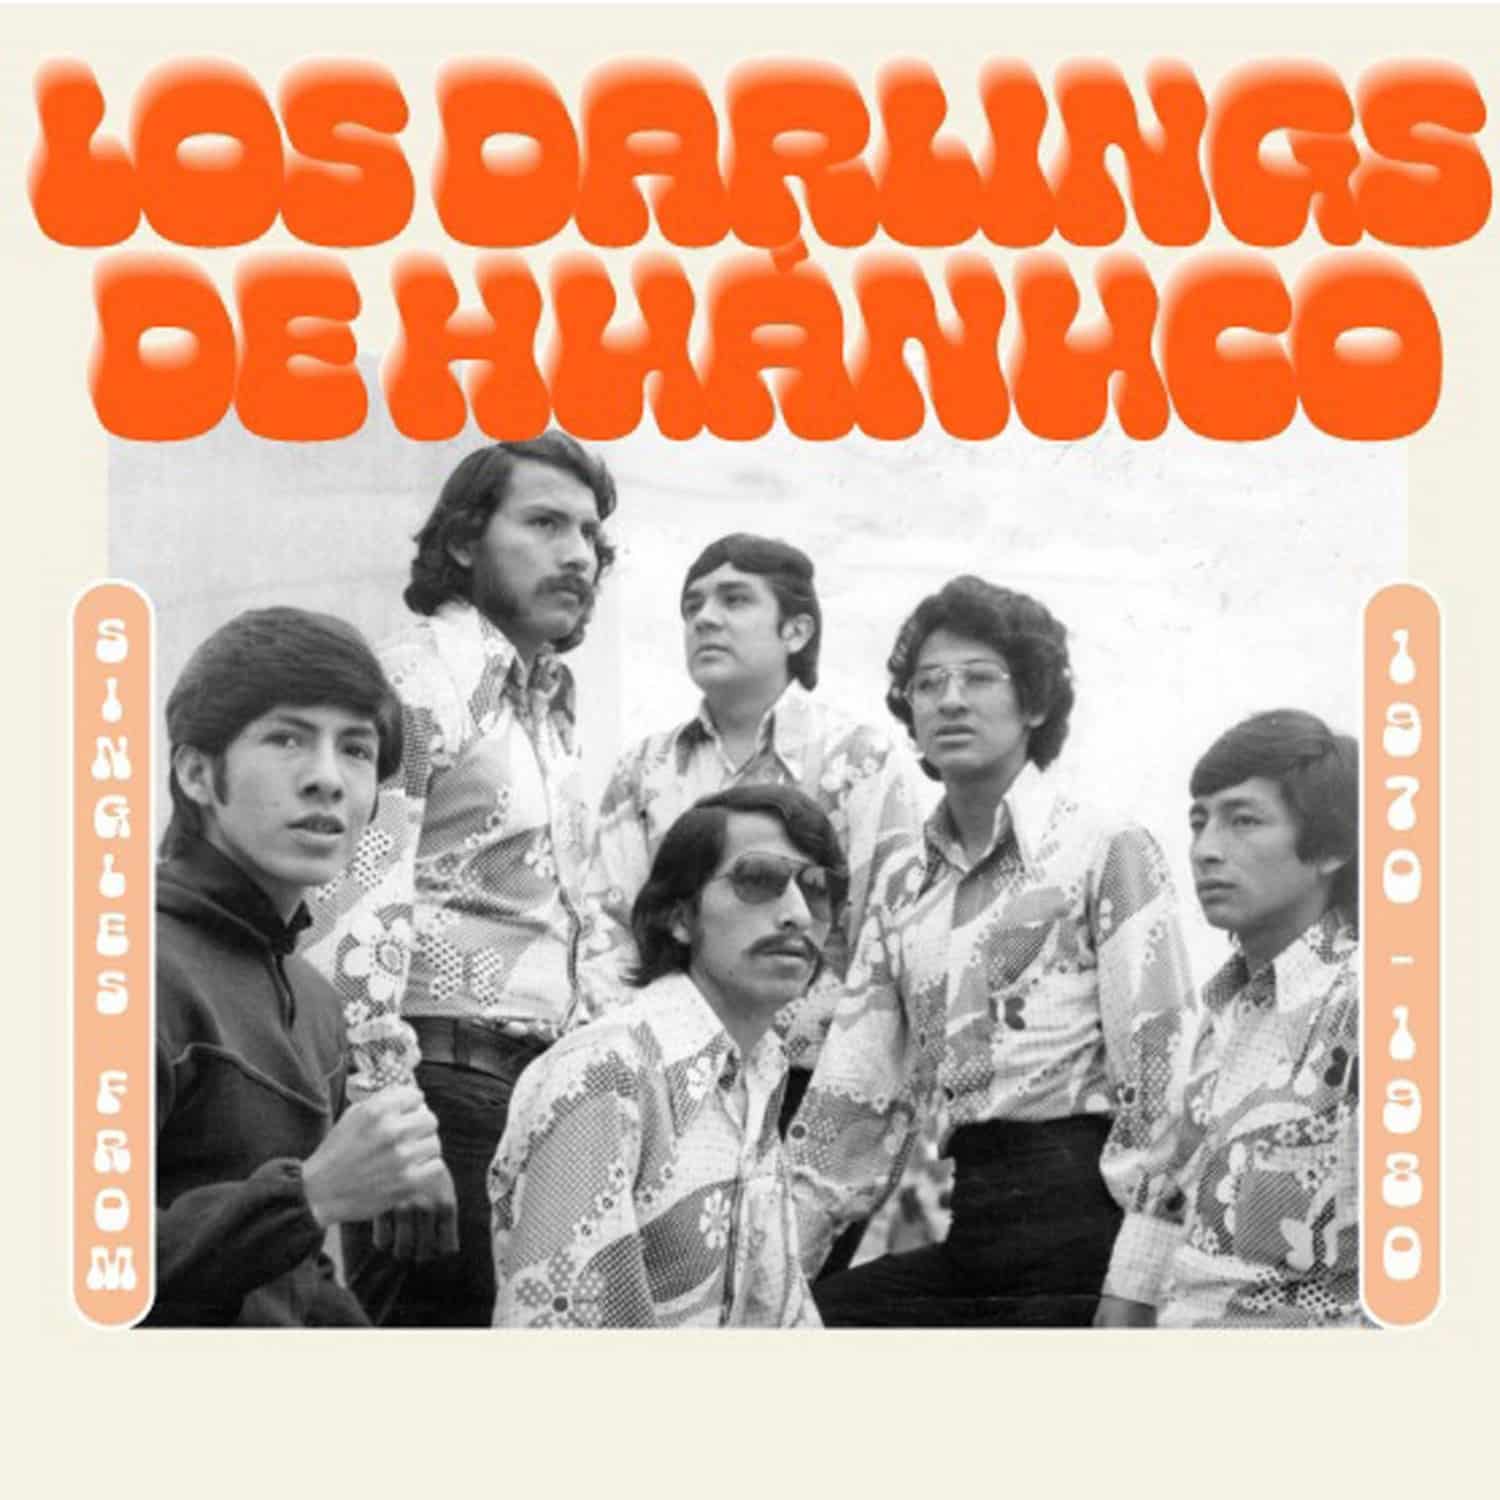 Los Darlings de Huanuco - SINGLES FROM 1970 - 1980 